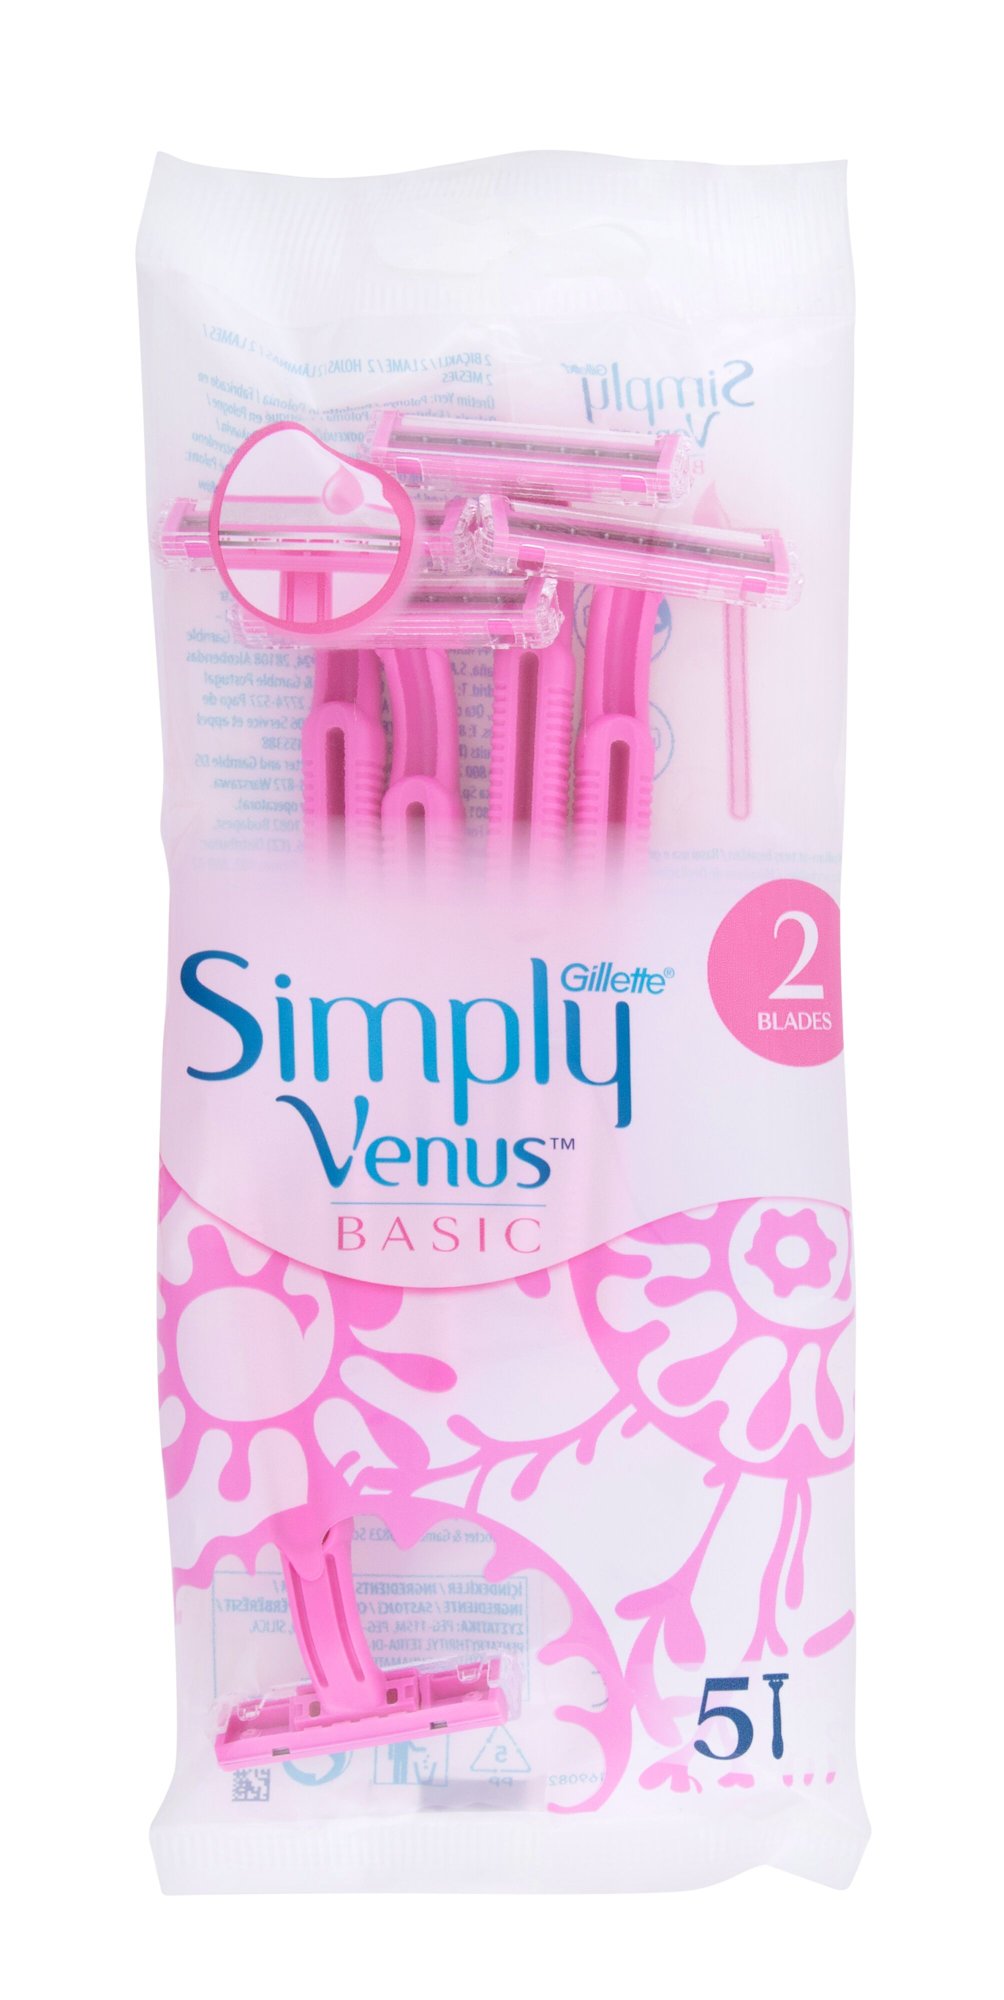 Gillette Venus Simply Basic skustuvas